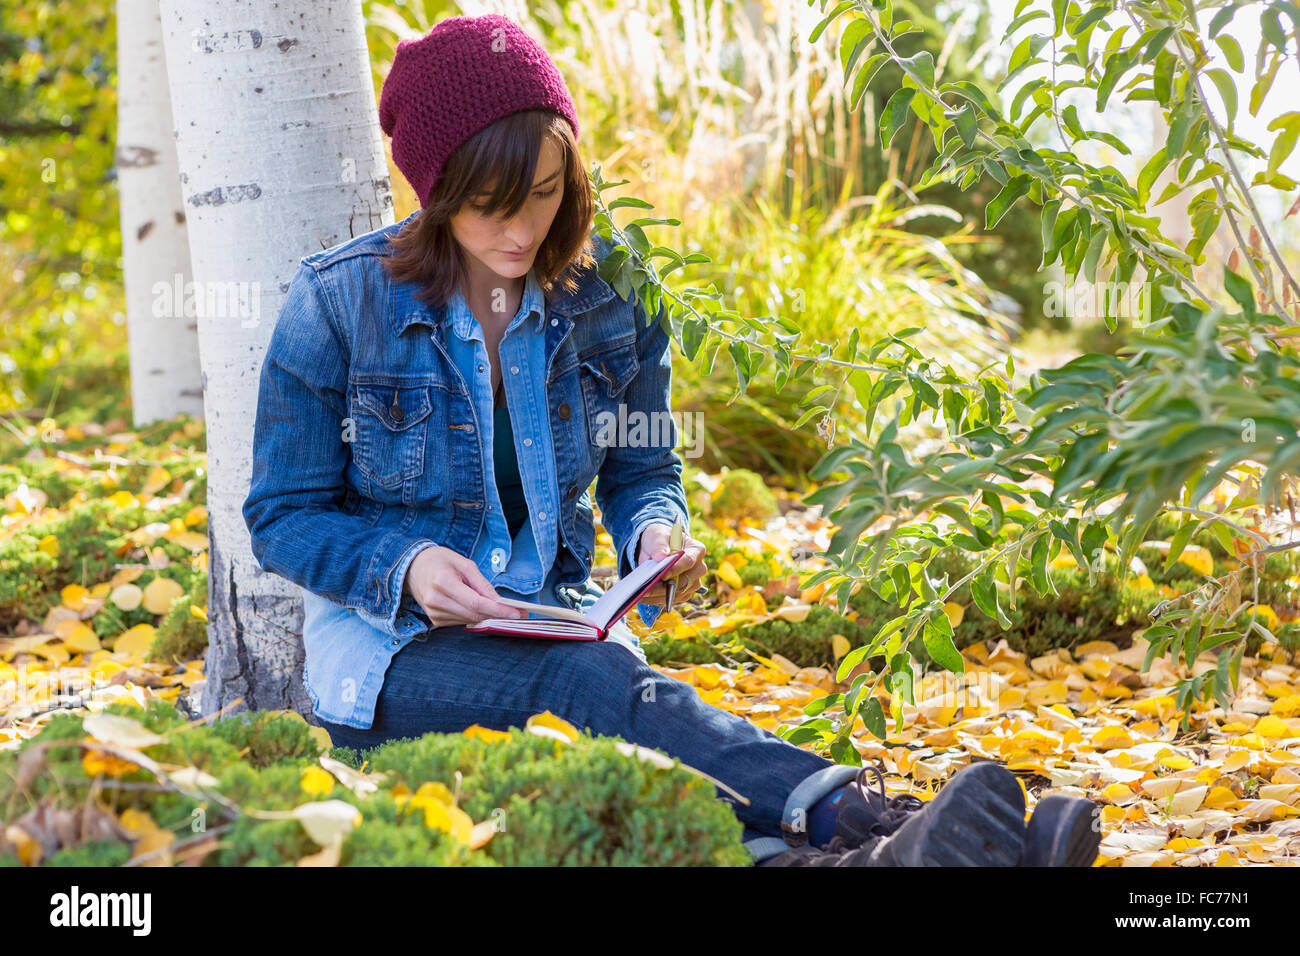 Hispanic woman reading in garden Stock Photo